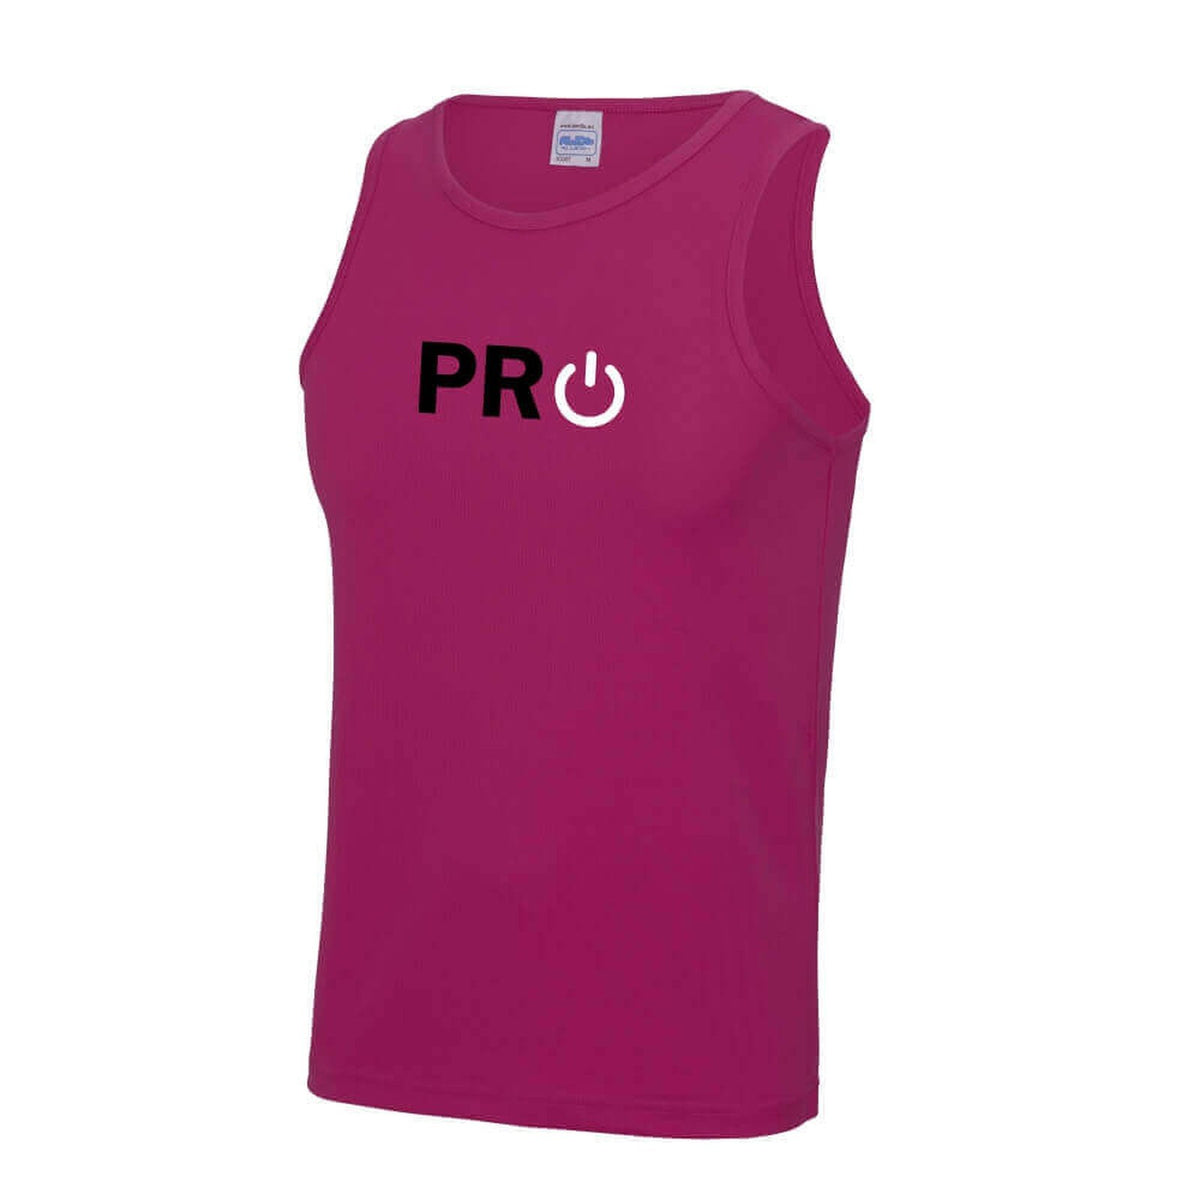 Pro Endurance - Club Vest Mens - Hot Pink